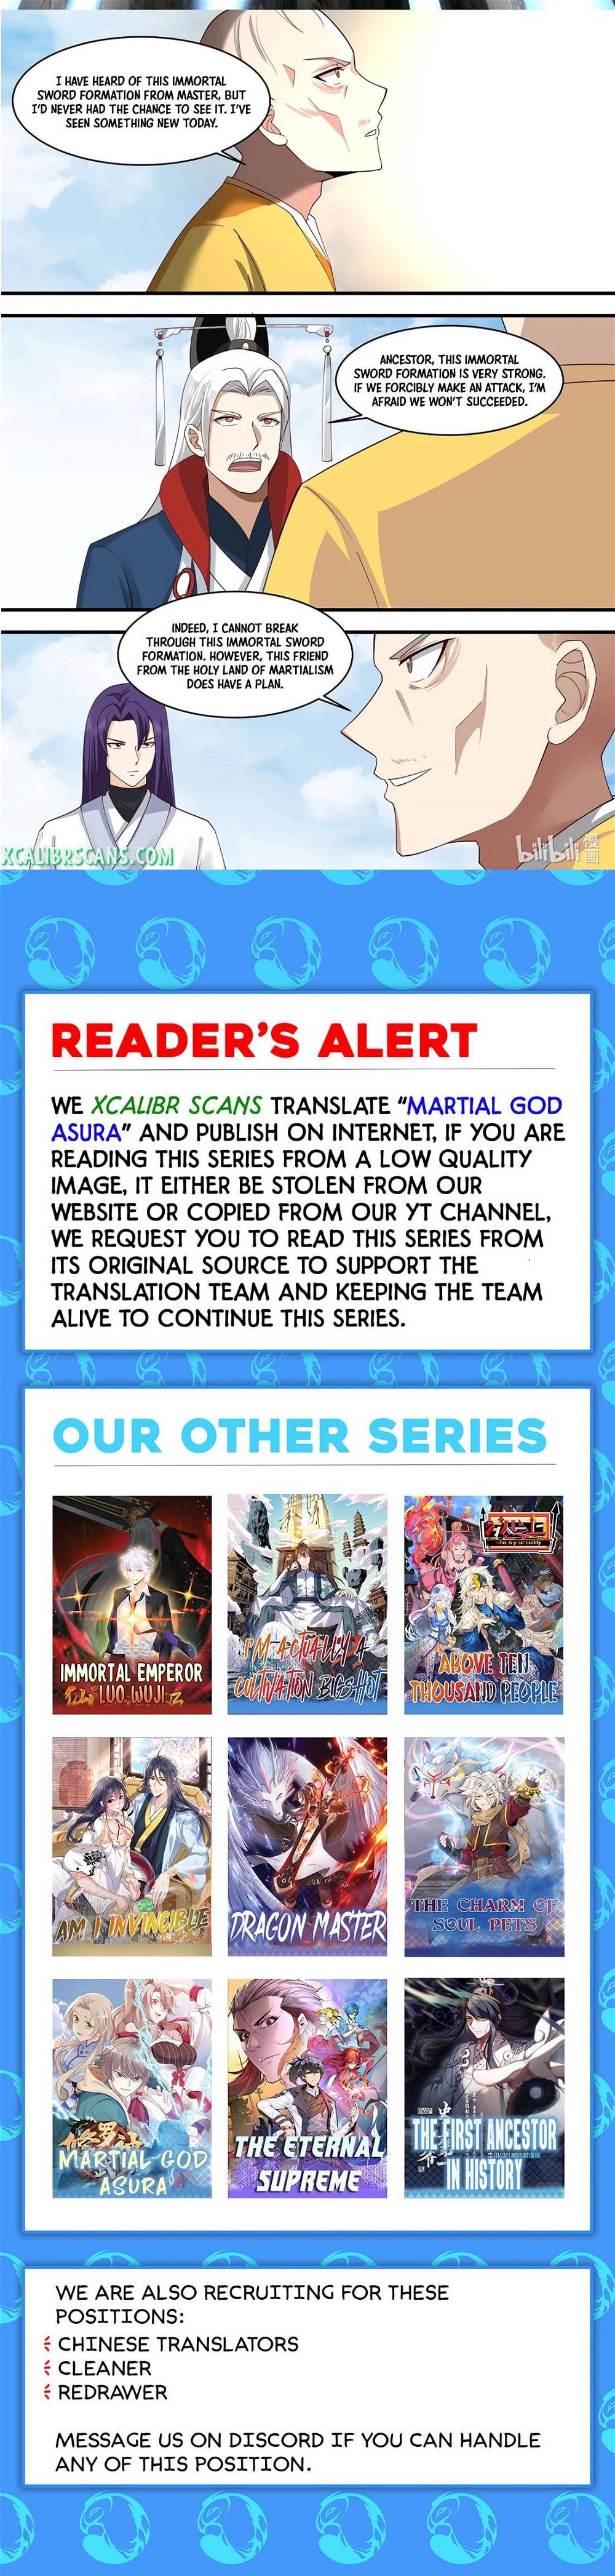 Martial God Asura Chapter 578 - Page 10